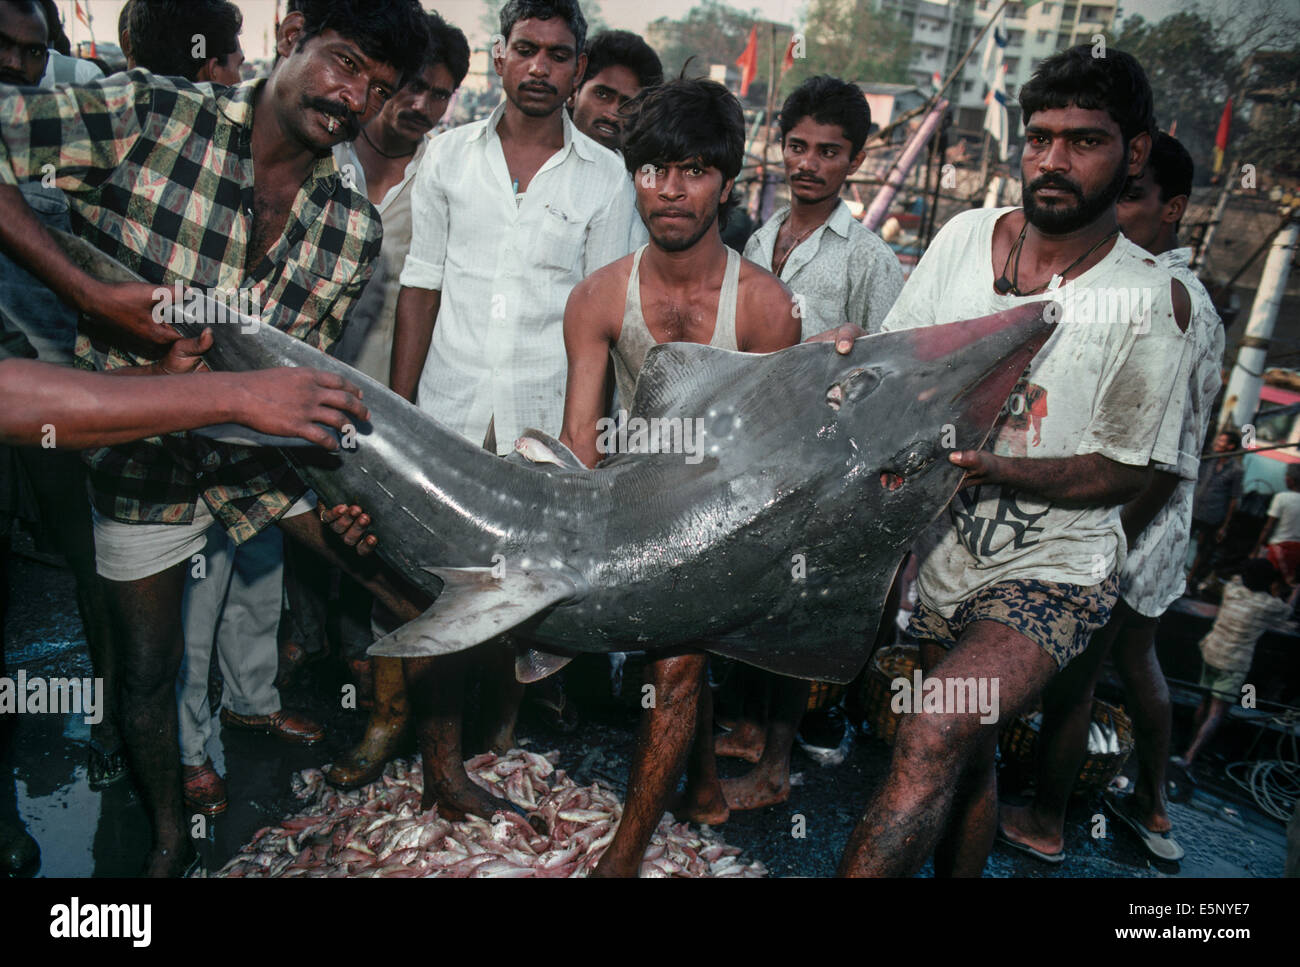 A shovel nosed guitar shark (rhinosbatos productus) being sold at the Bombay Fish Market. Bombay, India Stock Photo